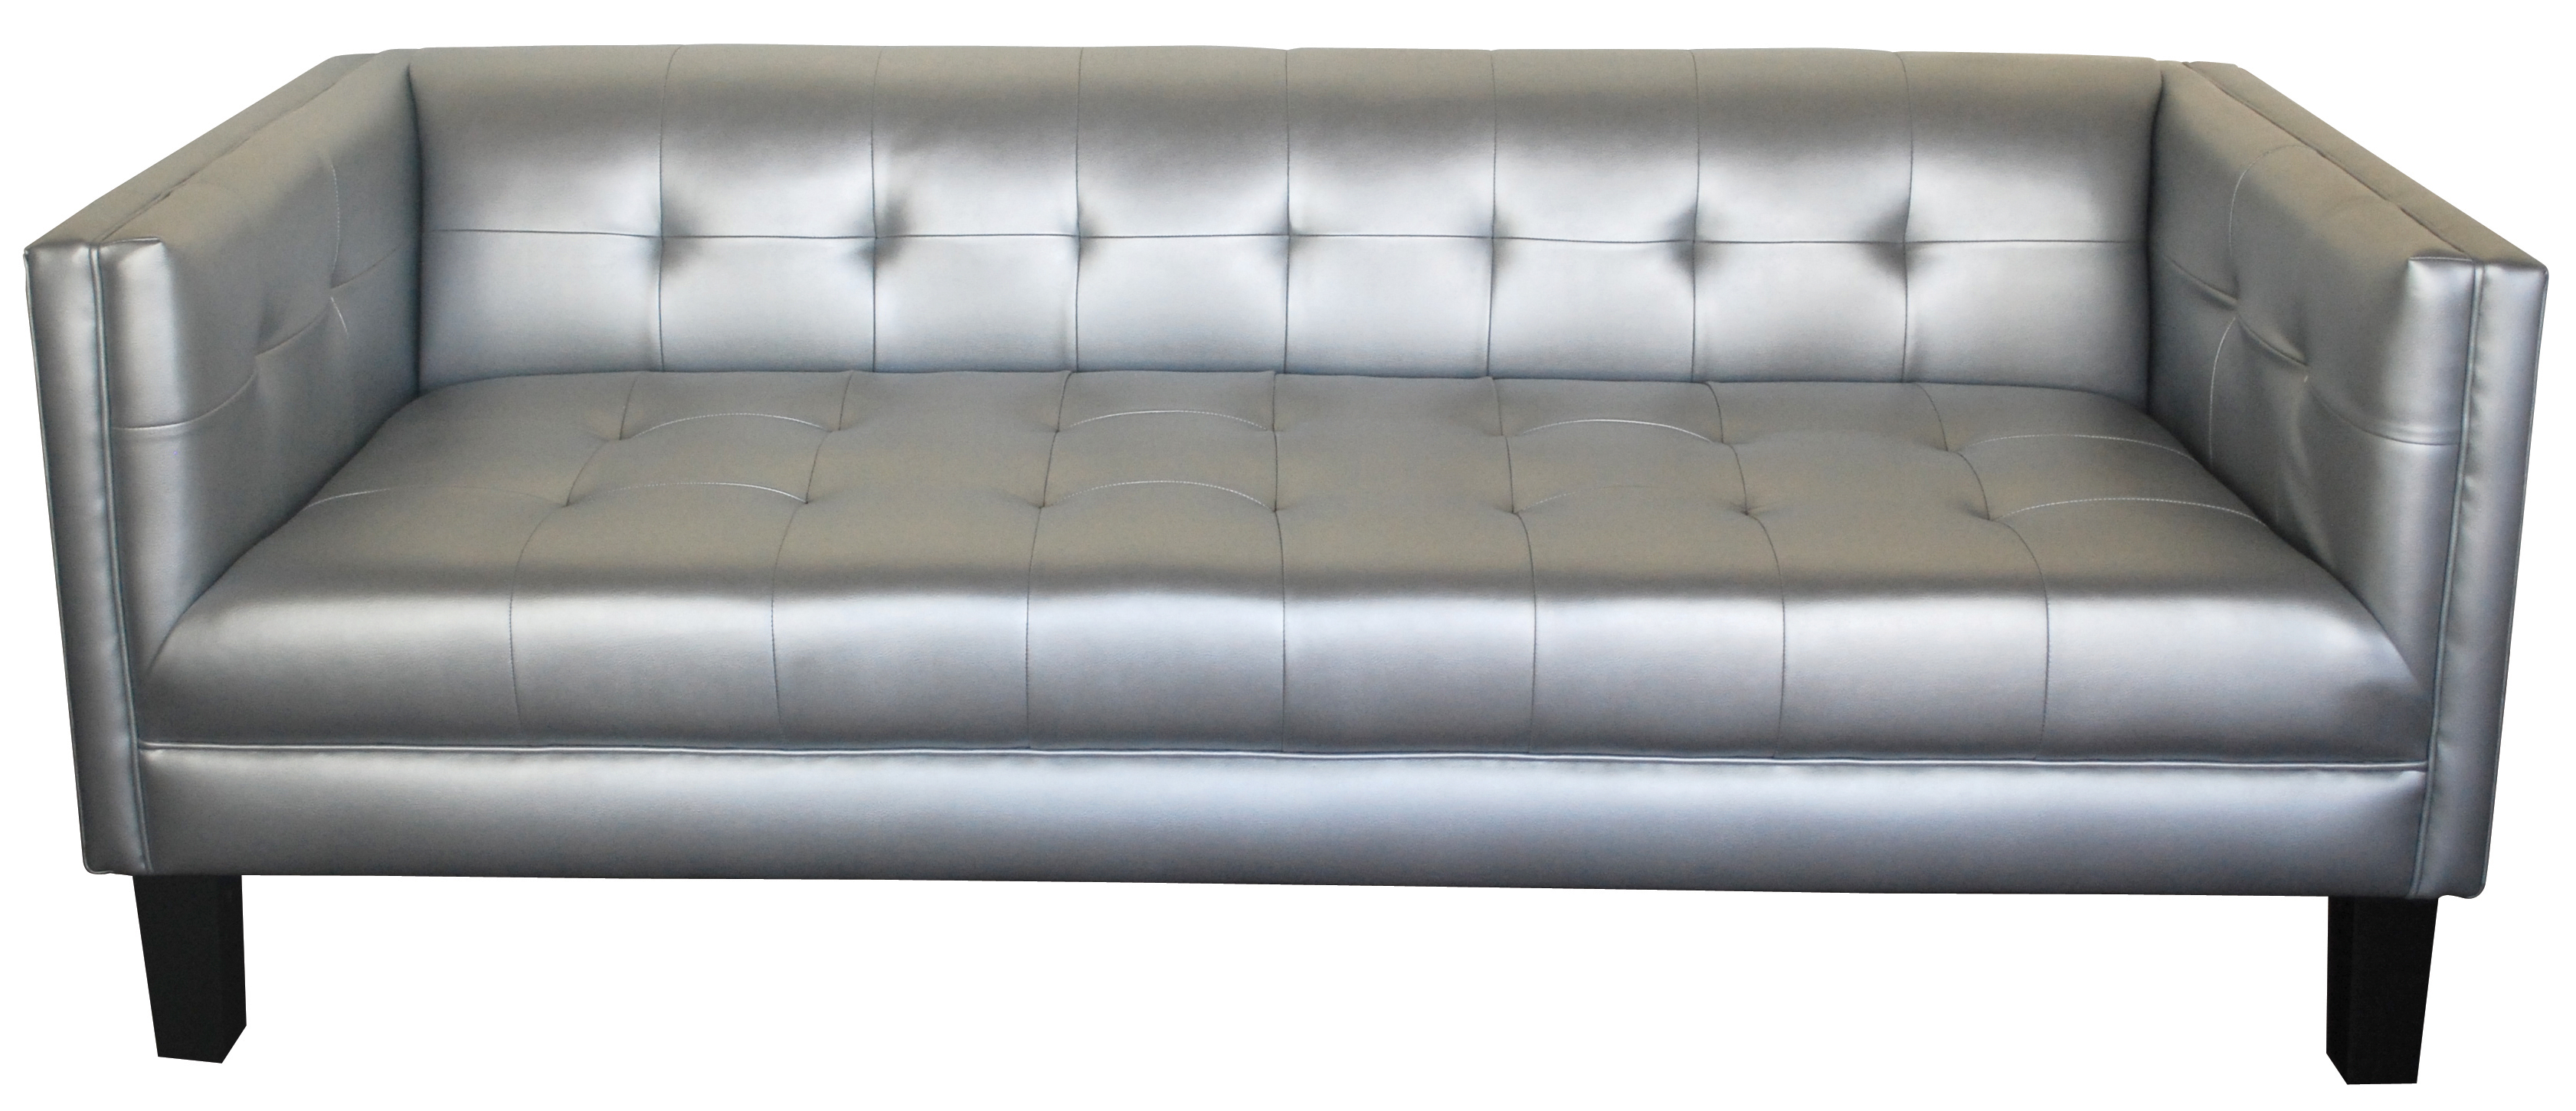 Designer8 Rox Sofa Metallic Silver, Silver Leather Furniture